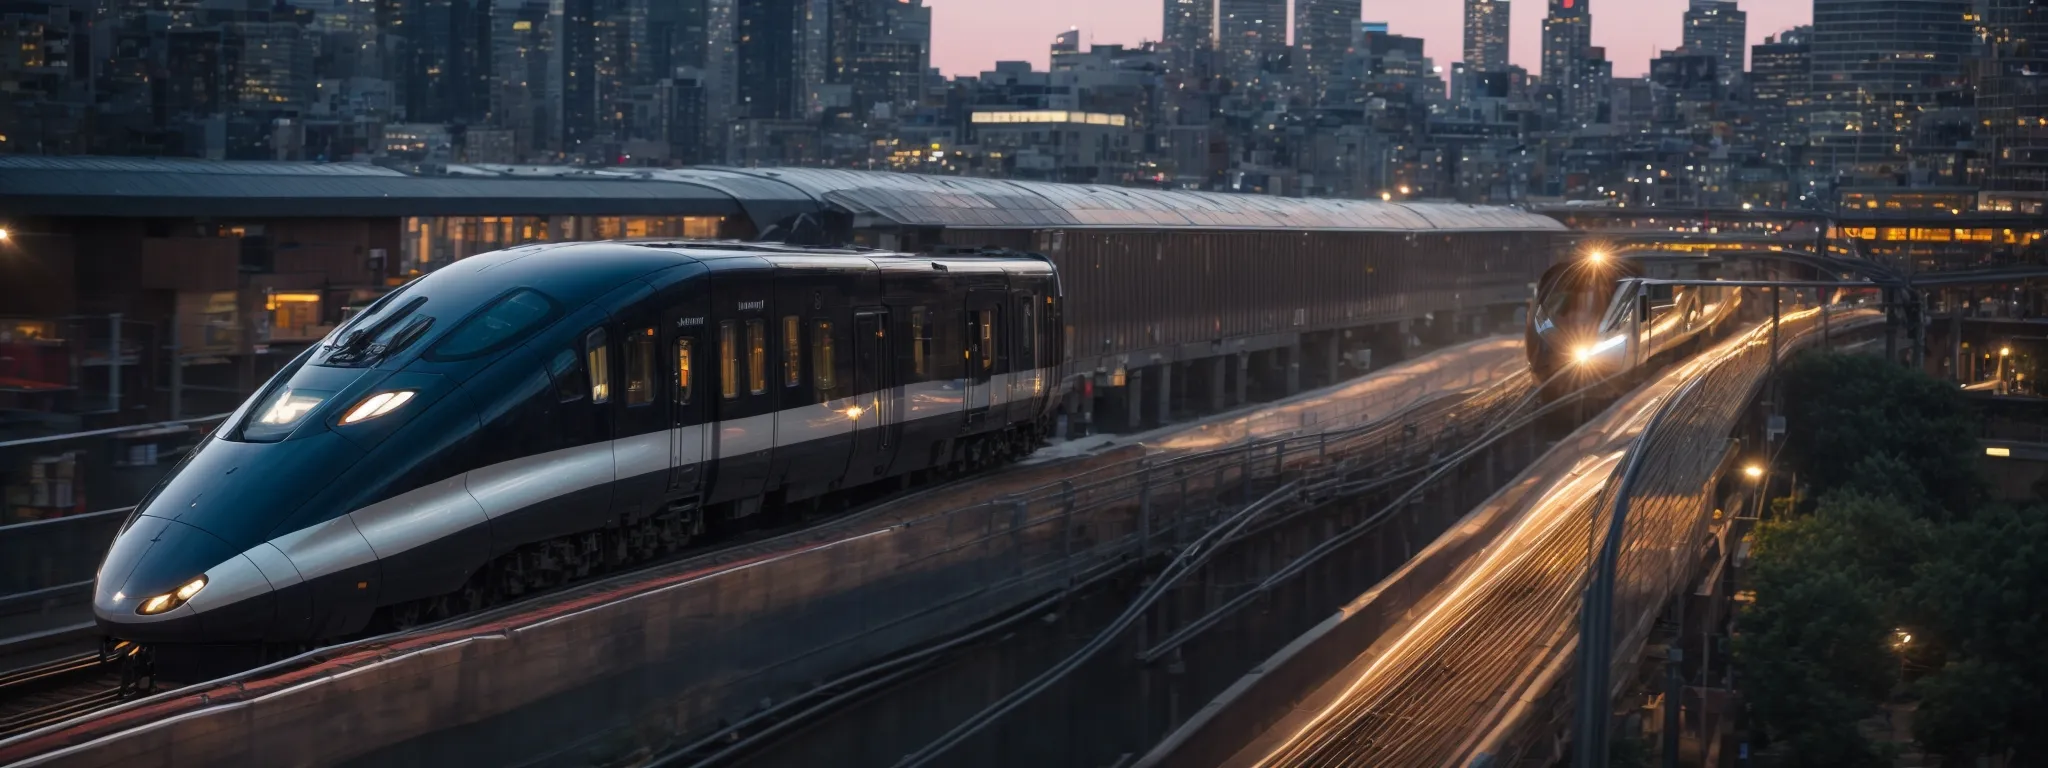 a sleek, high-speed train gliding effortlessly through a modern cityscape at dusk.